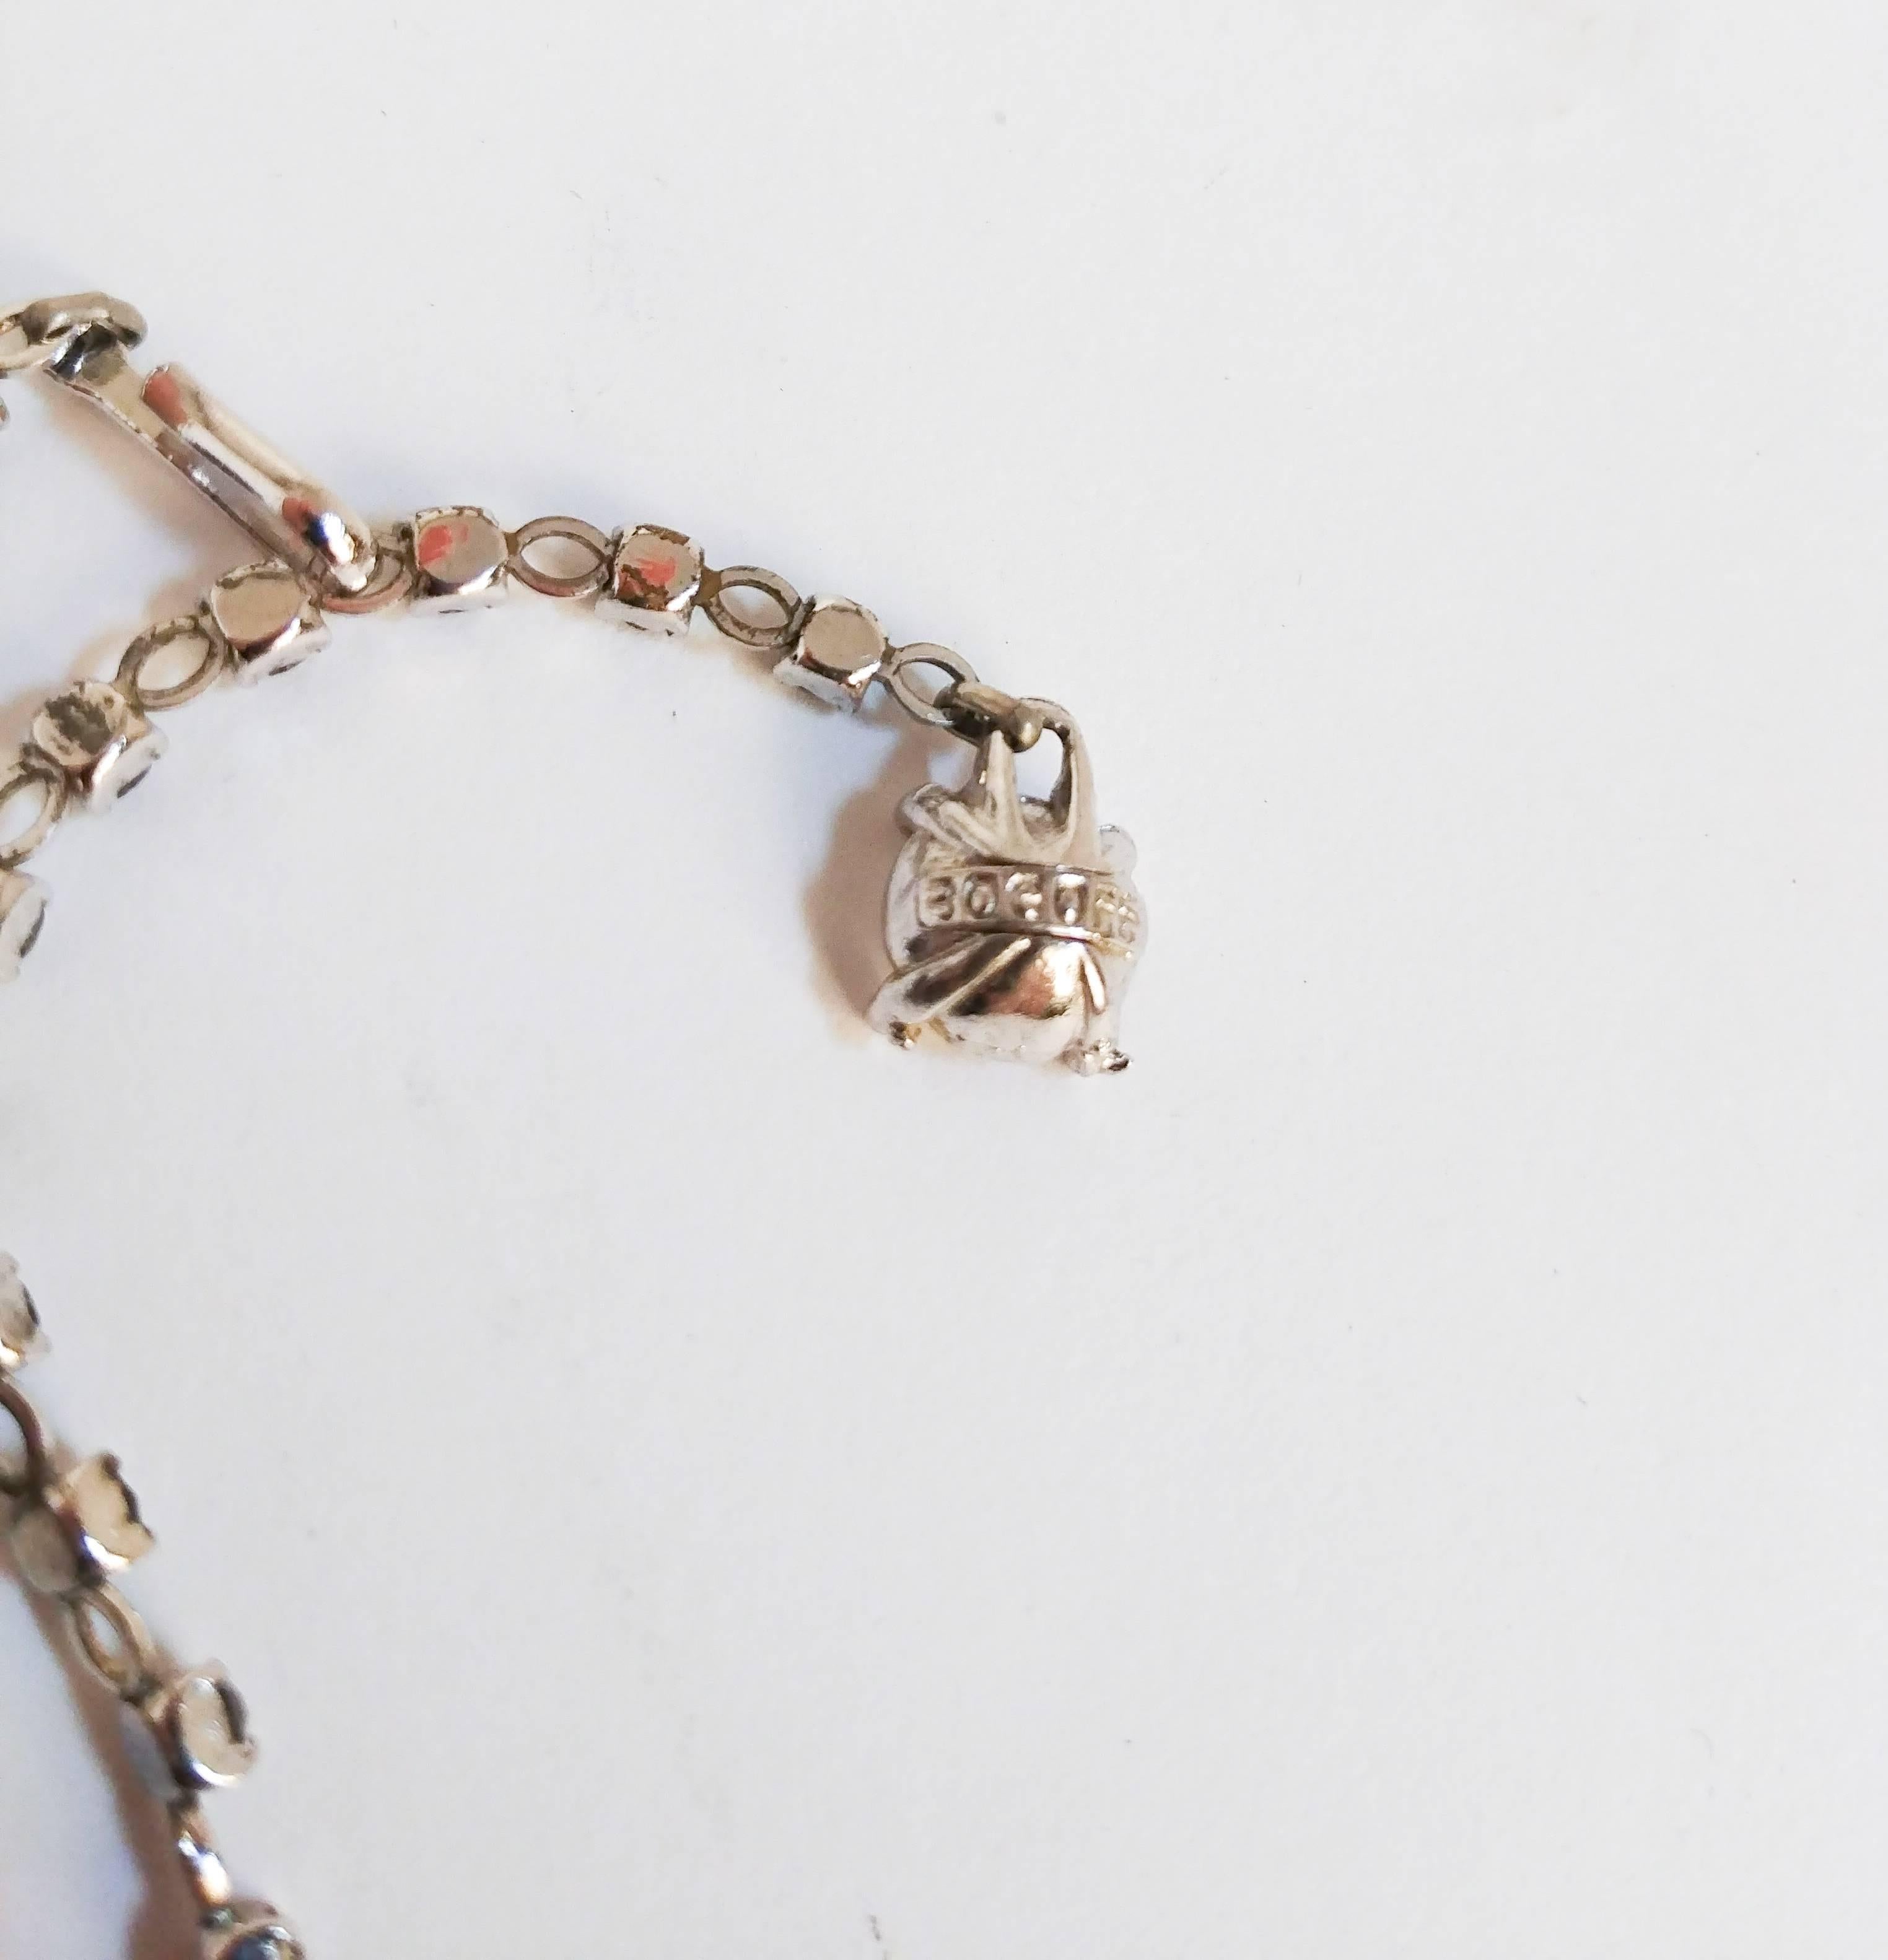 bogoff rhinestone necklace